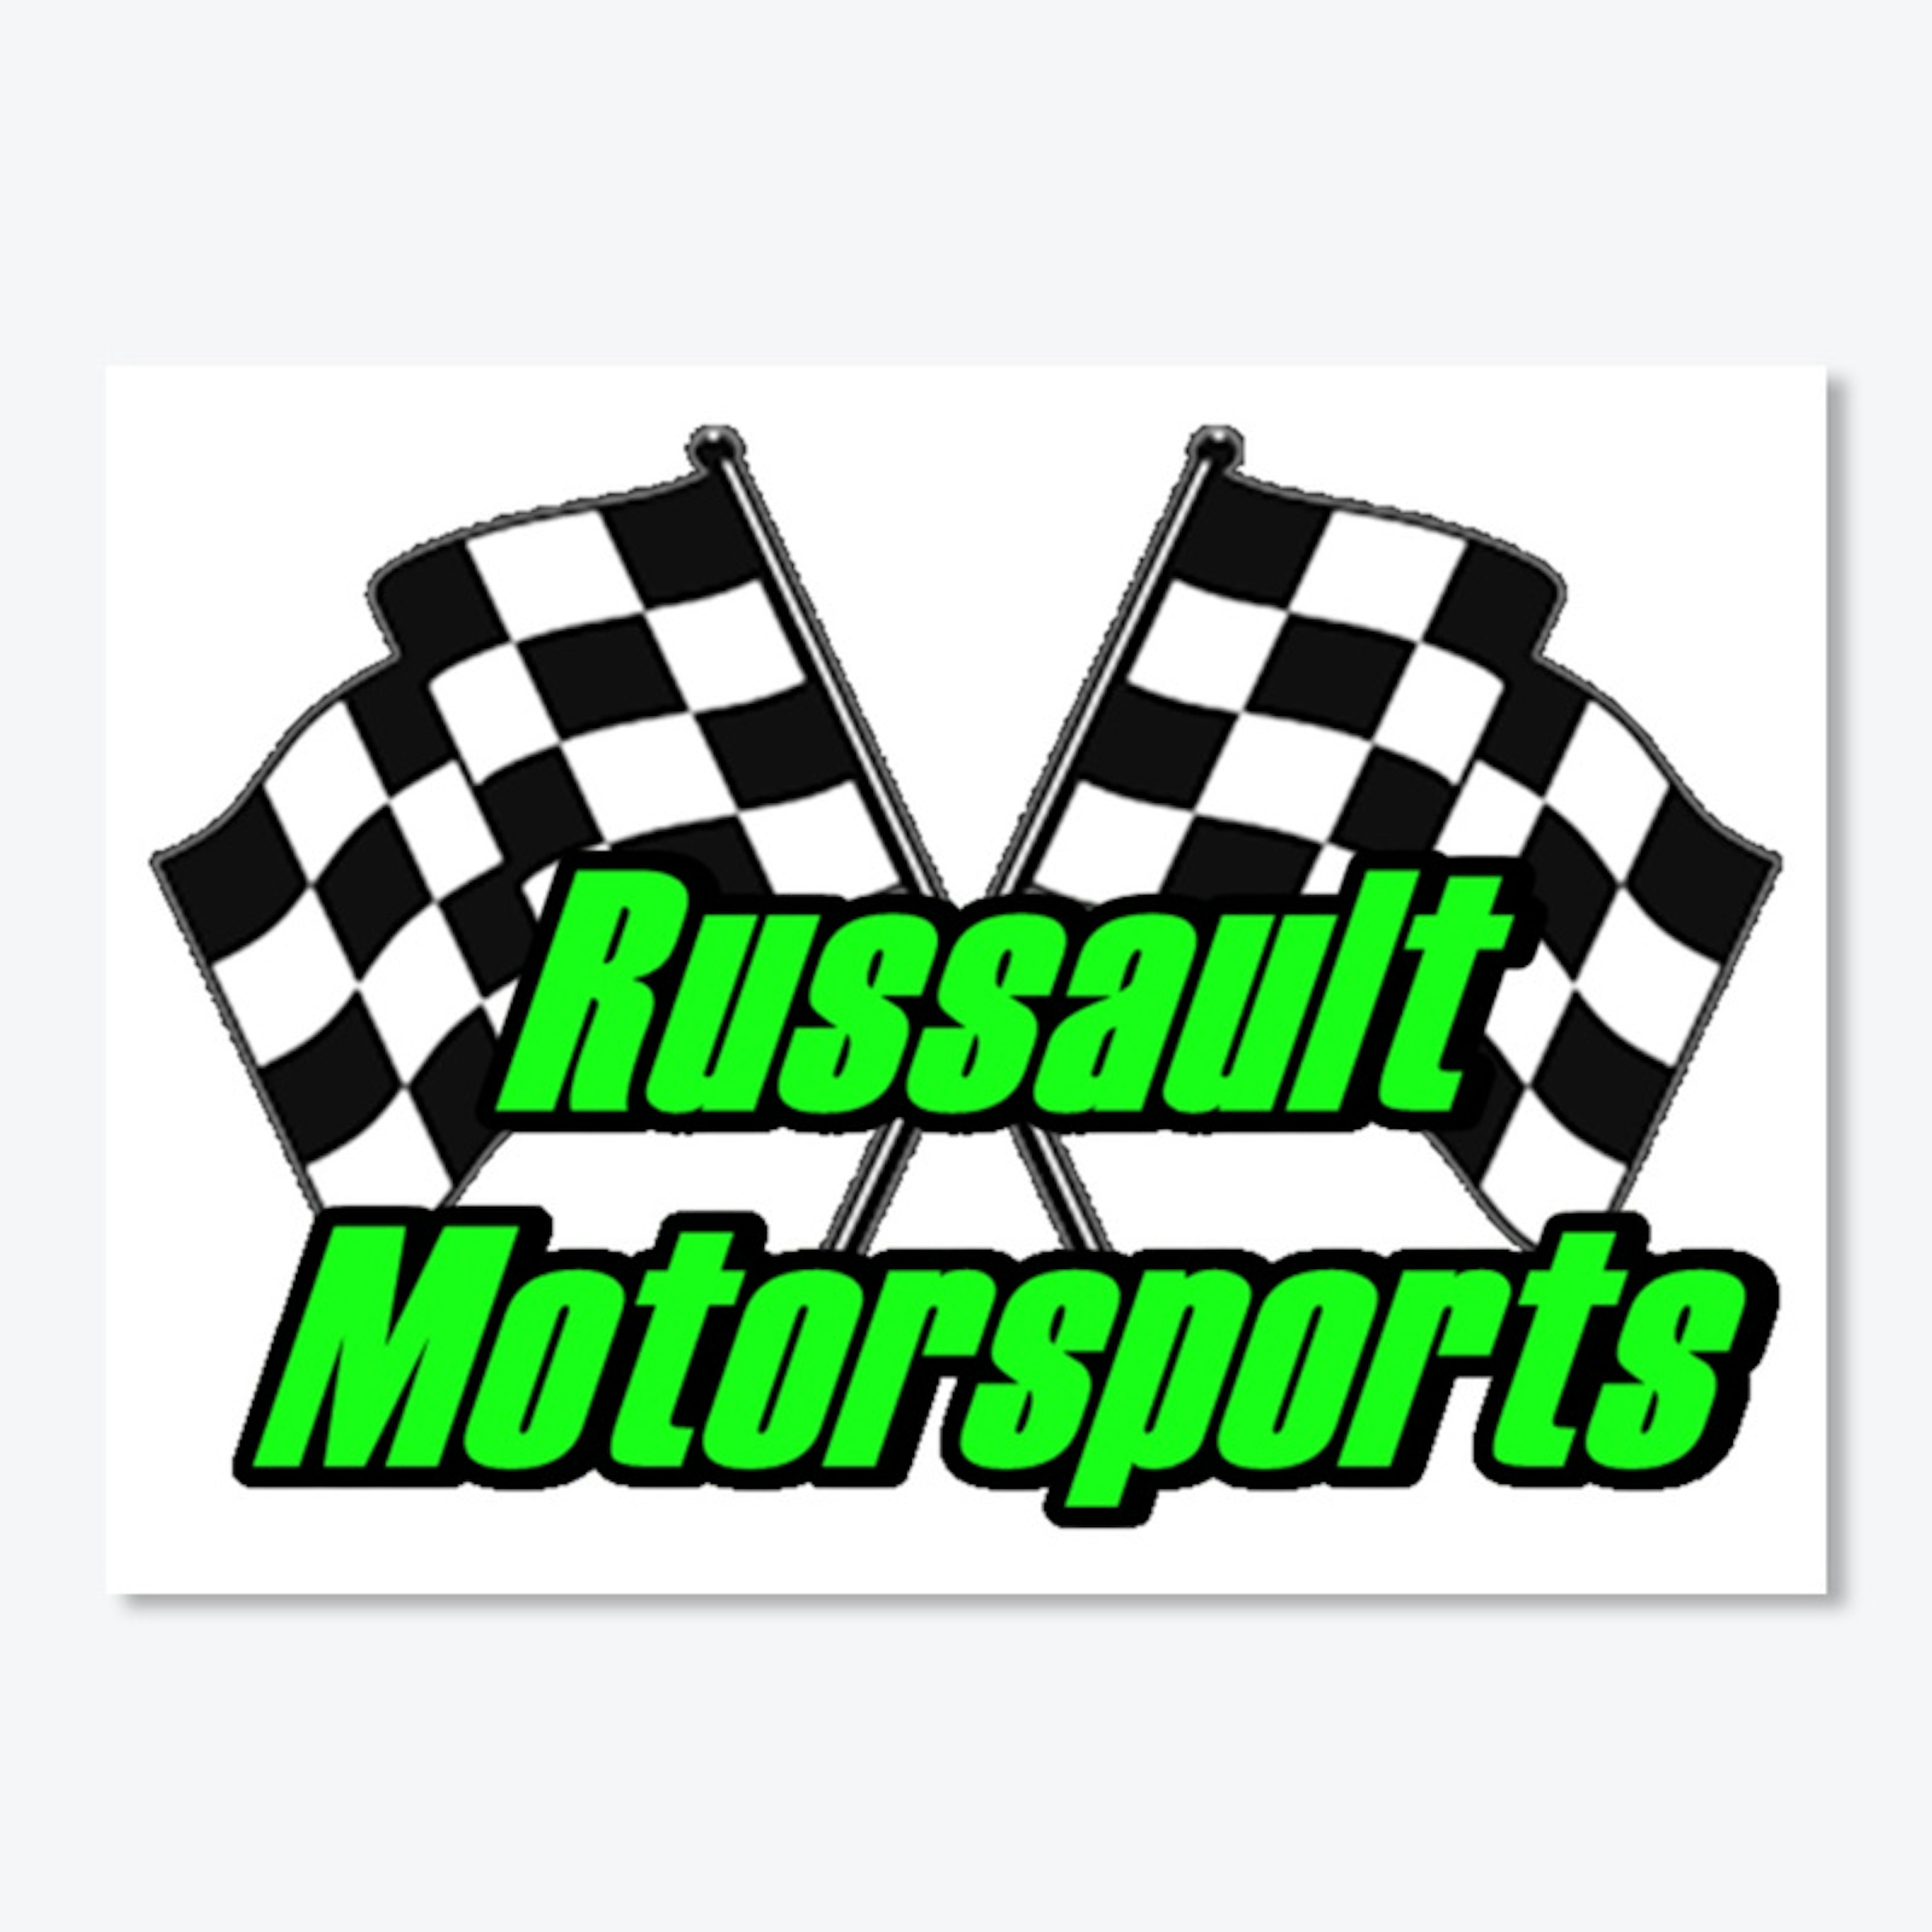 Russault Motorsports Stuff